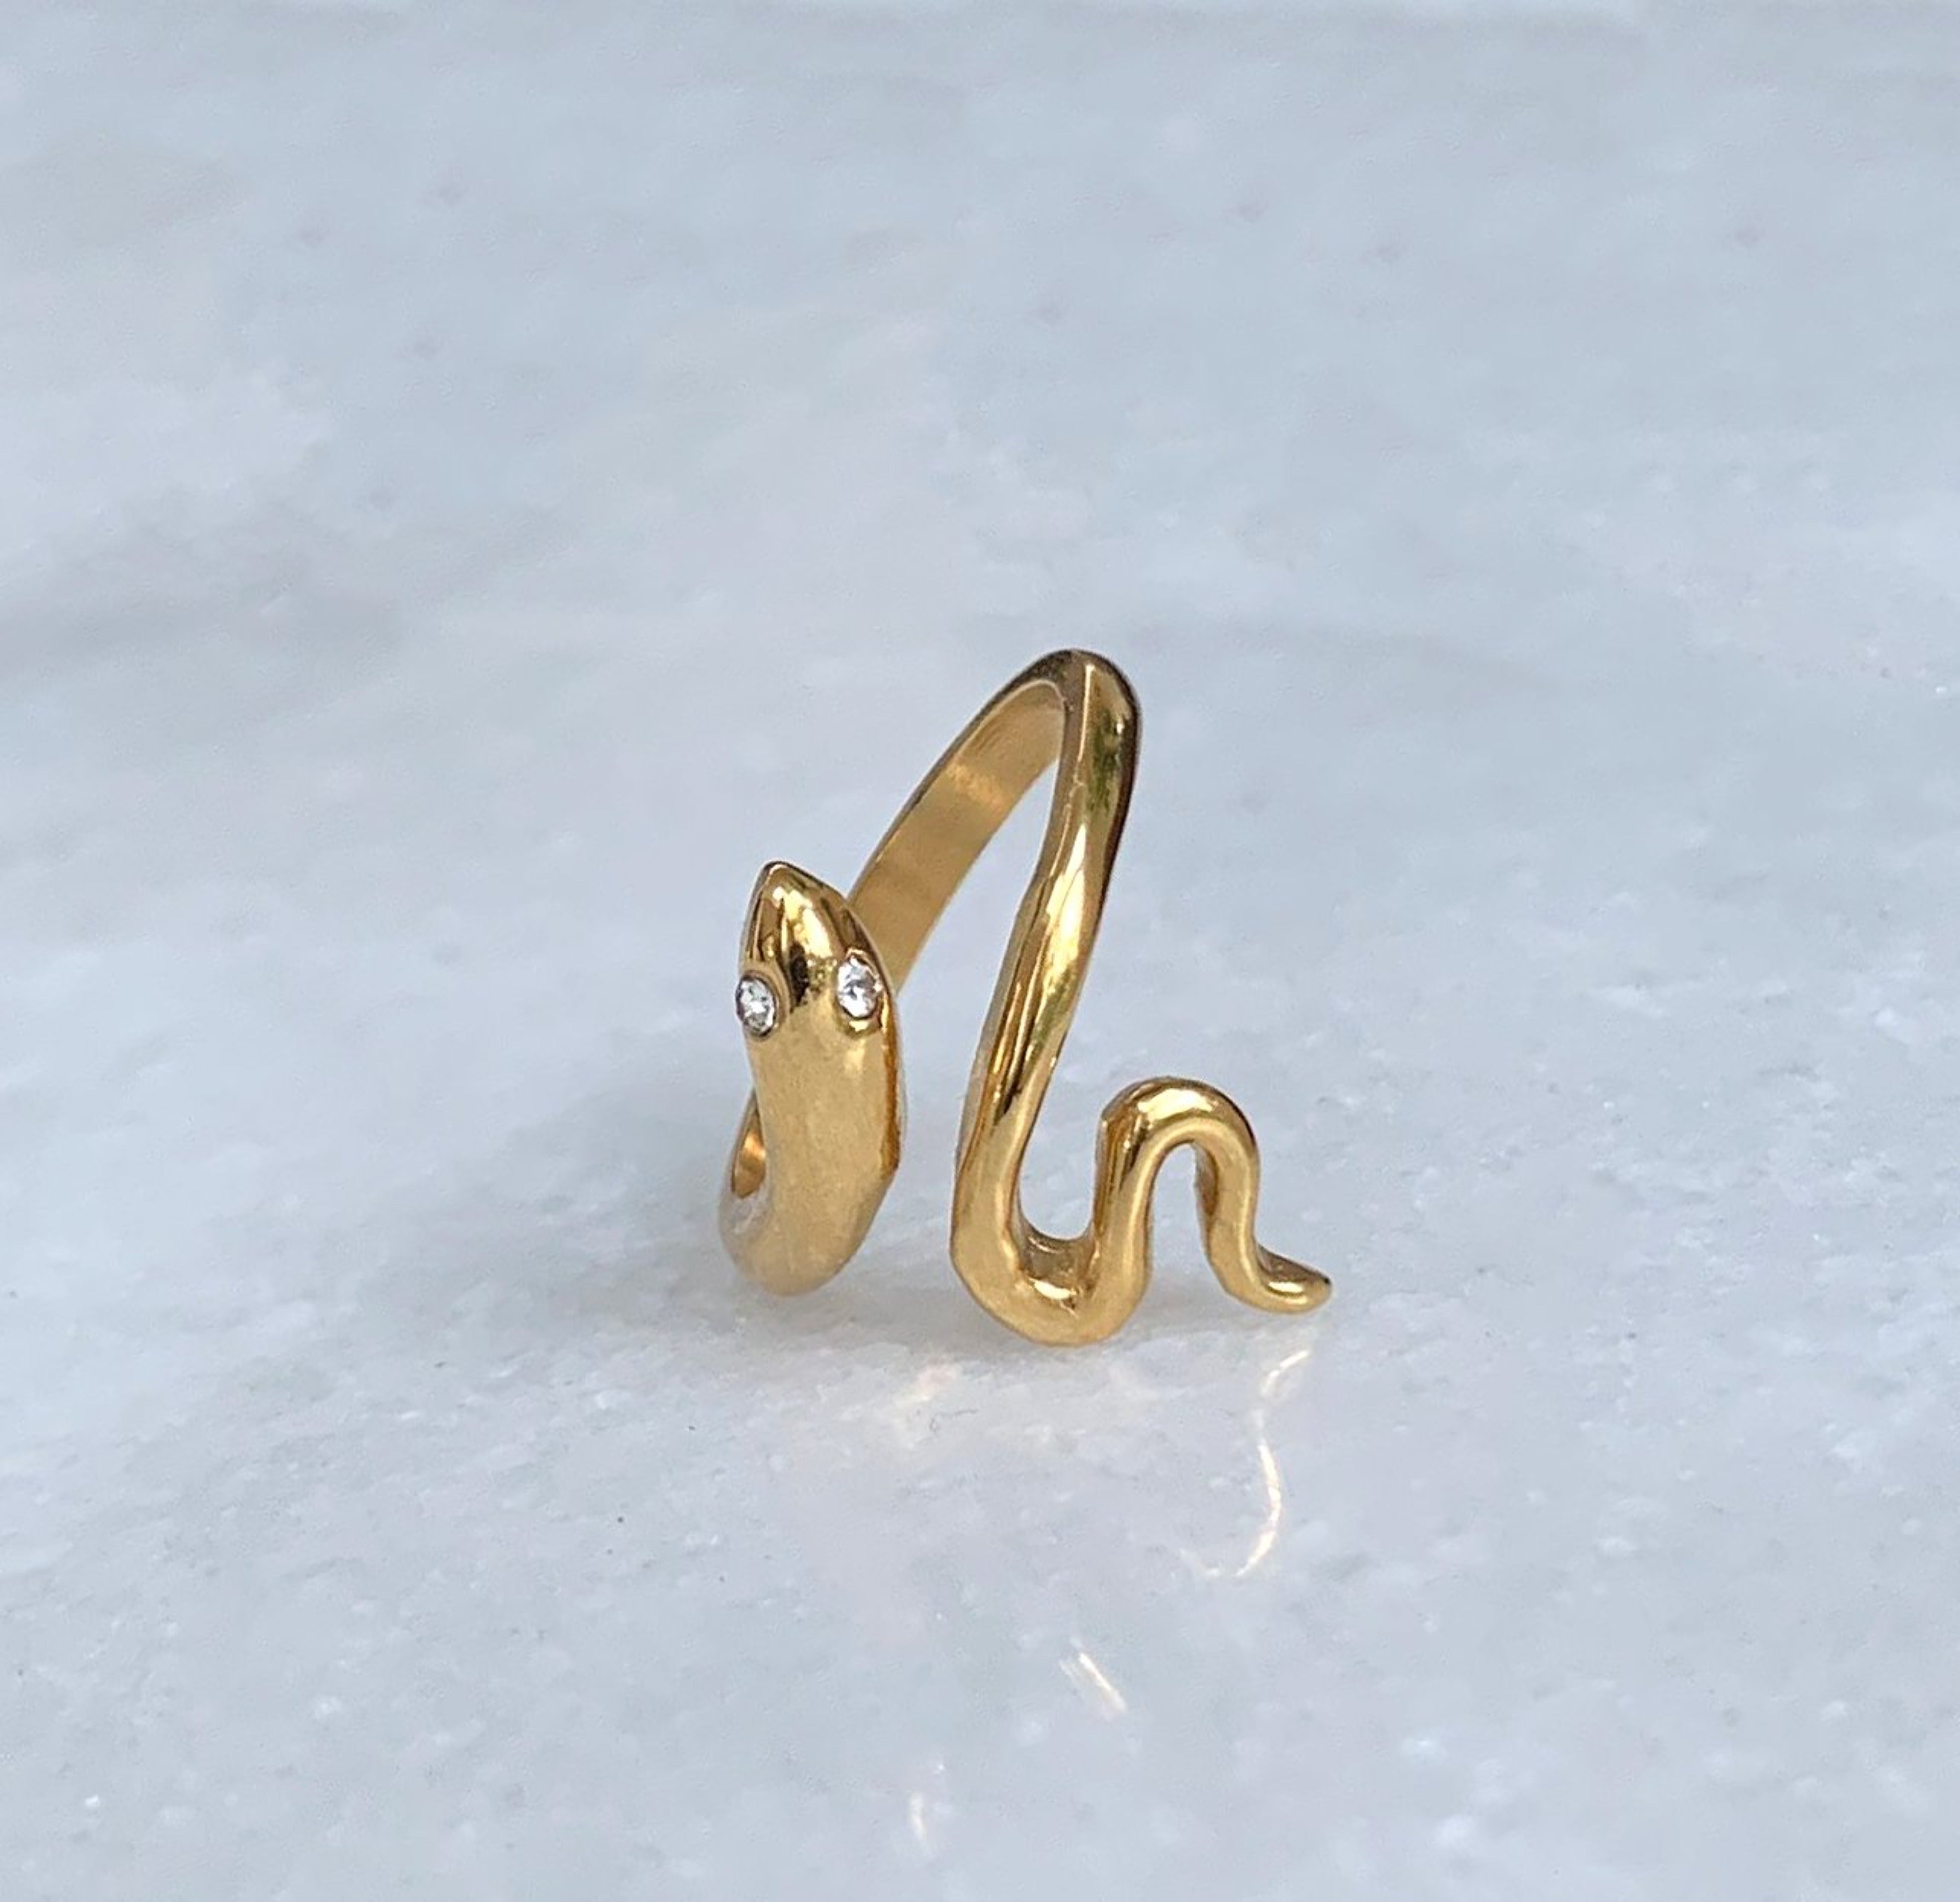 gold snake ring waterproof jewelry 